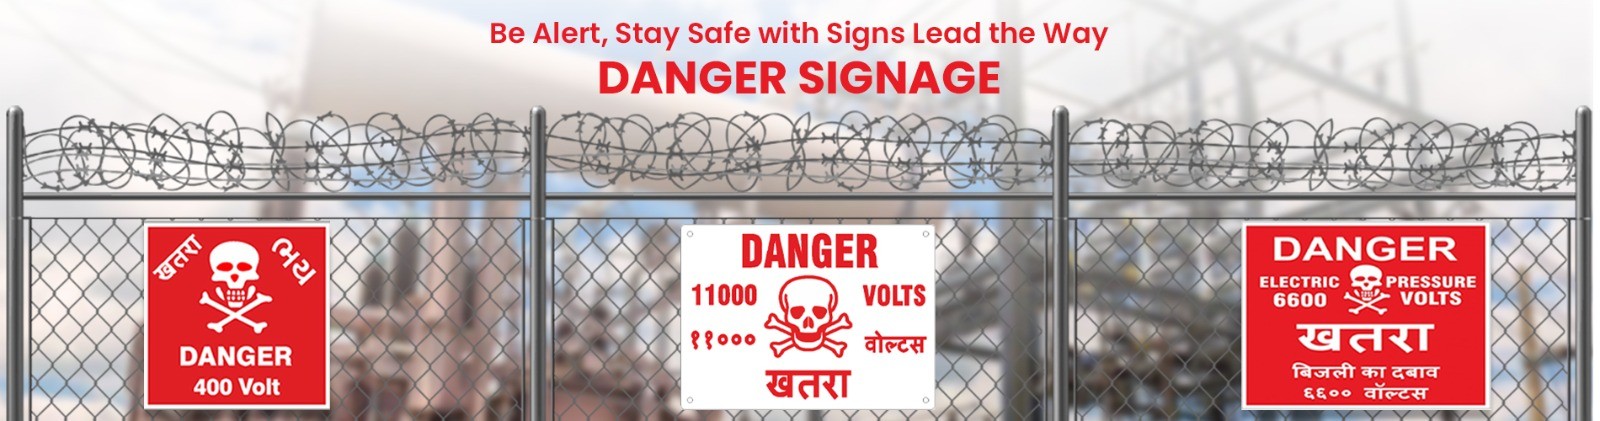 Dangers signage